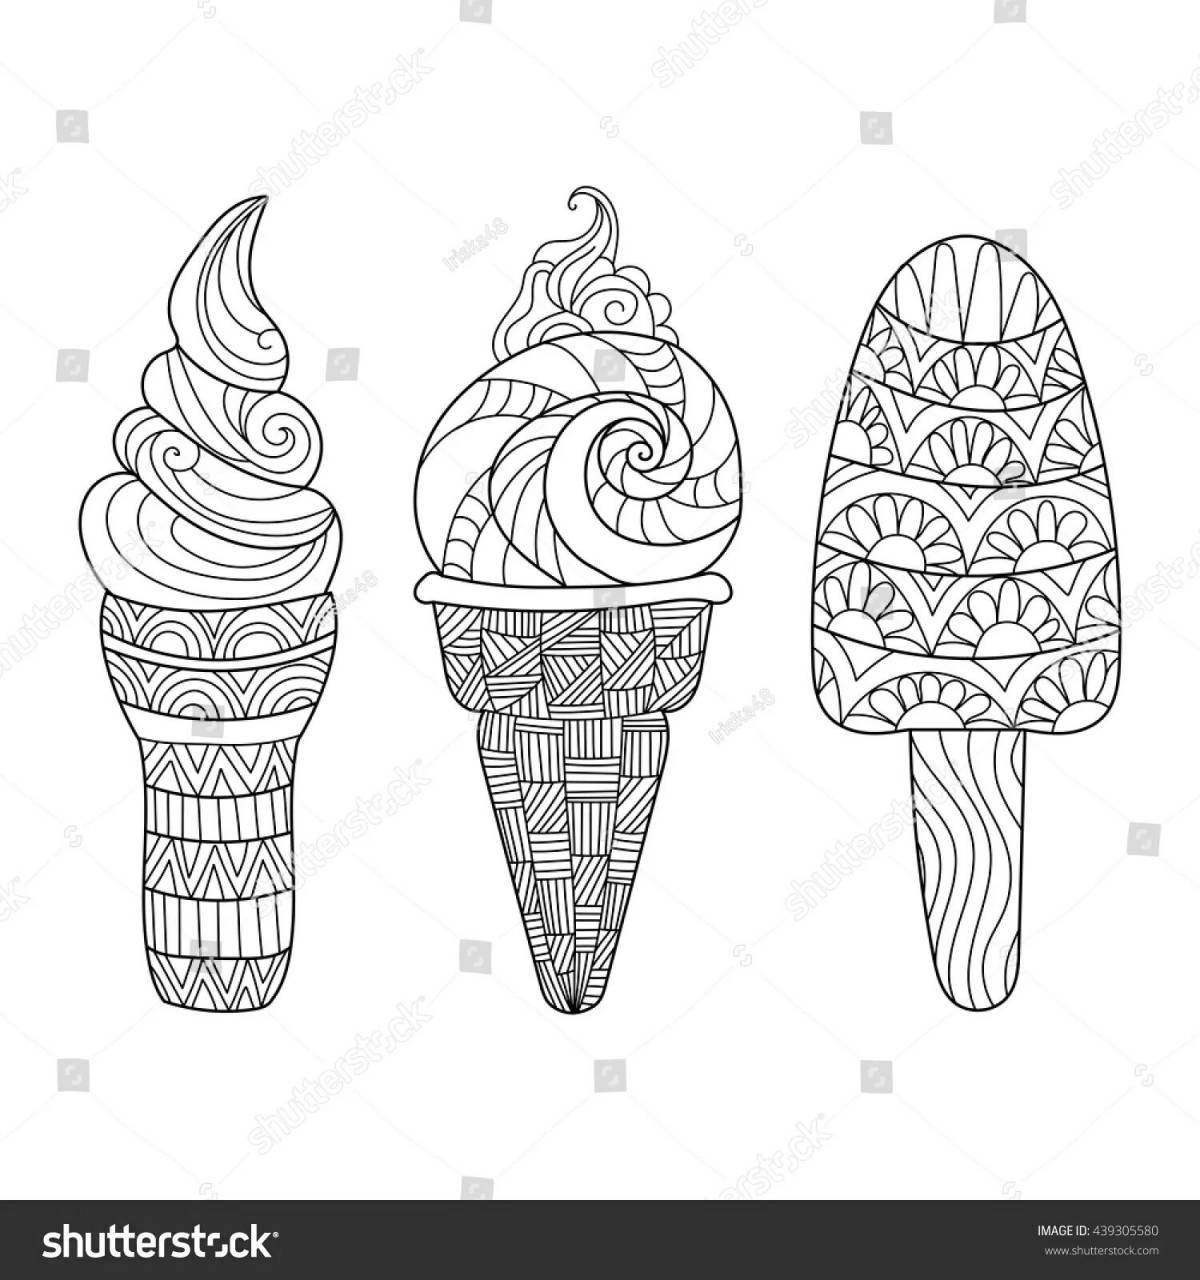 Heavenly anti-stress edible ice cream